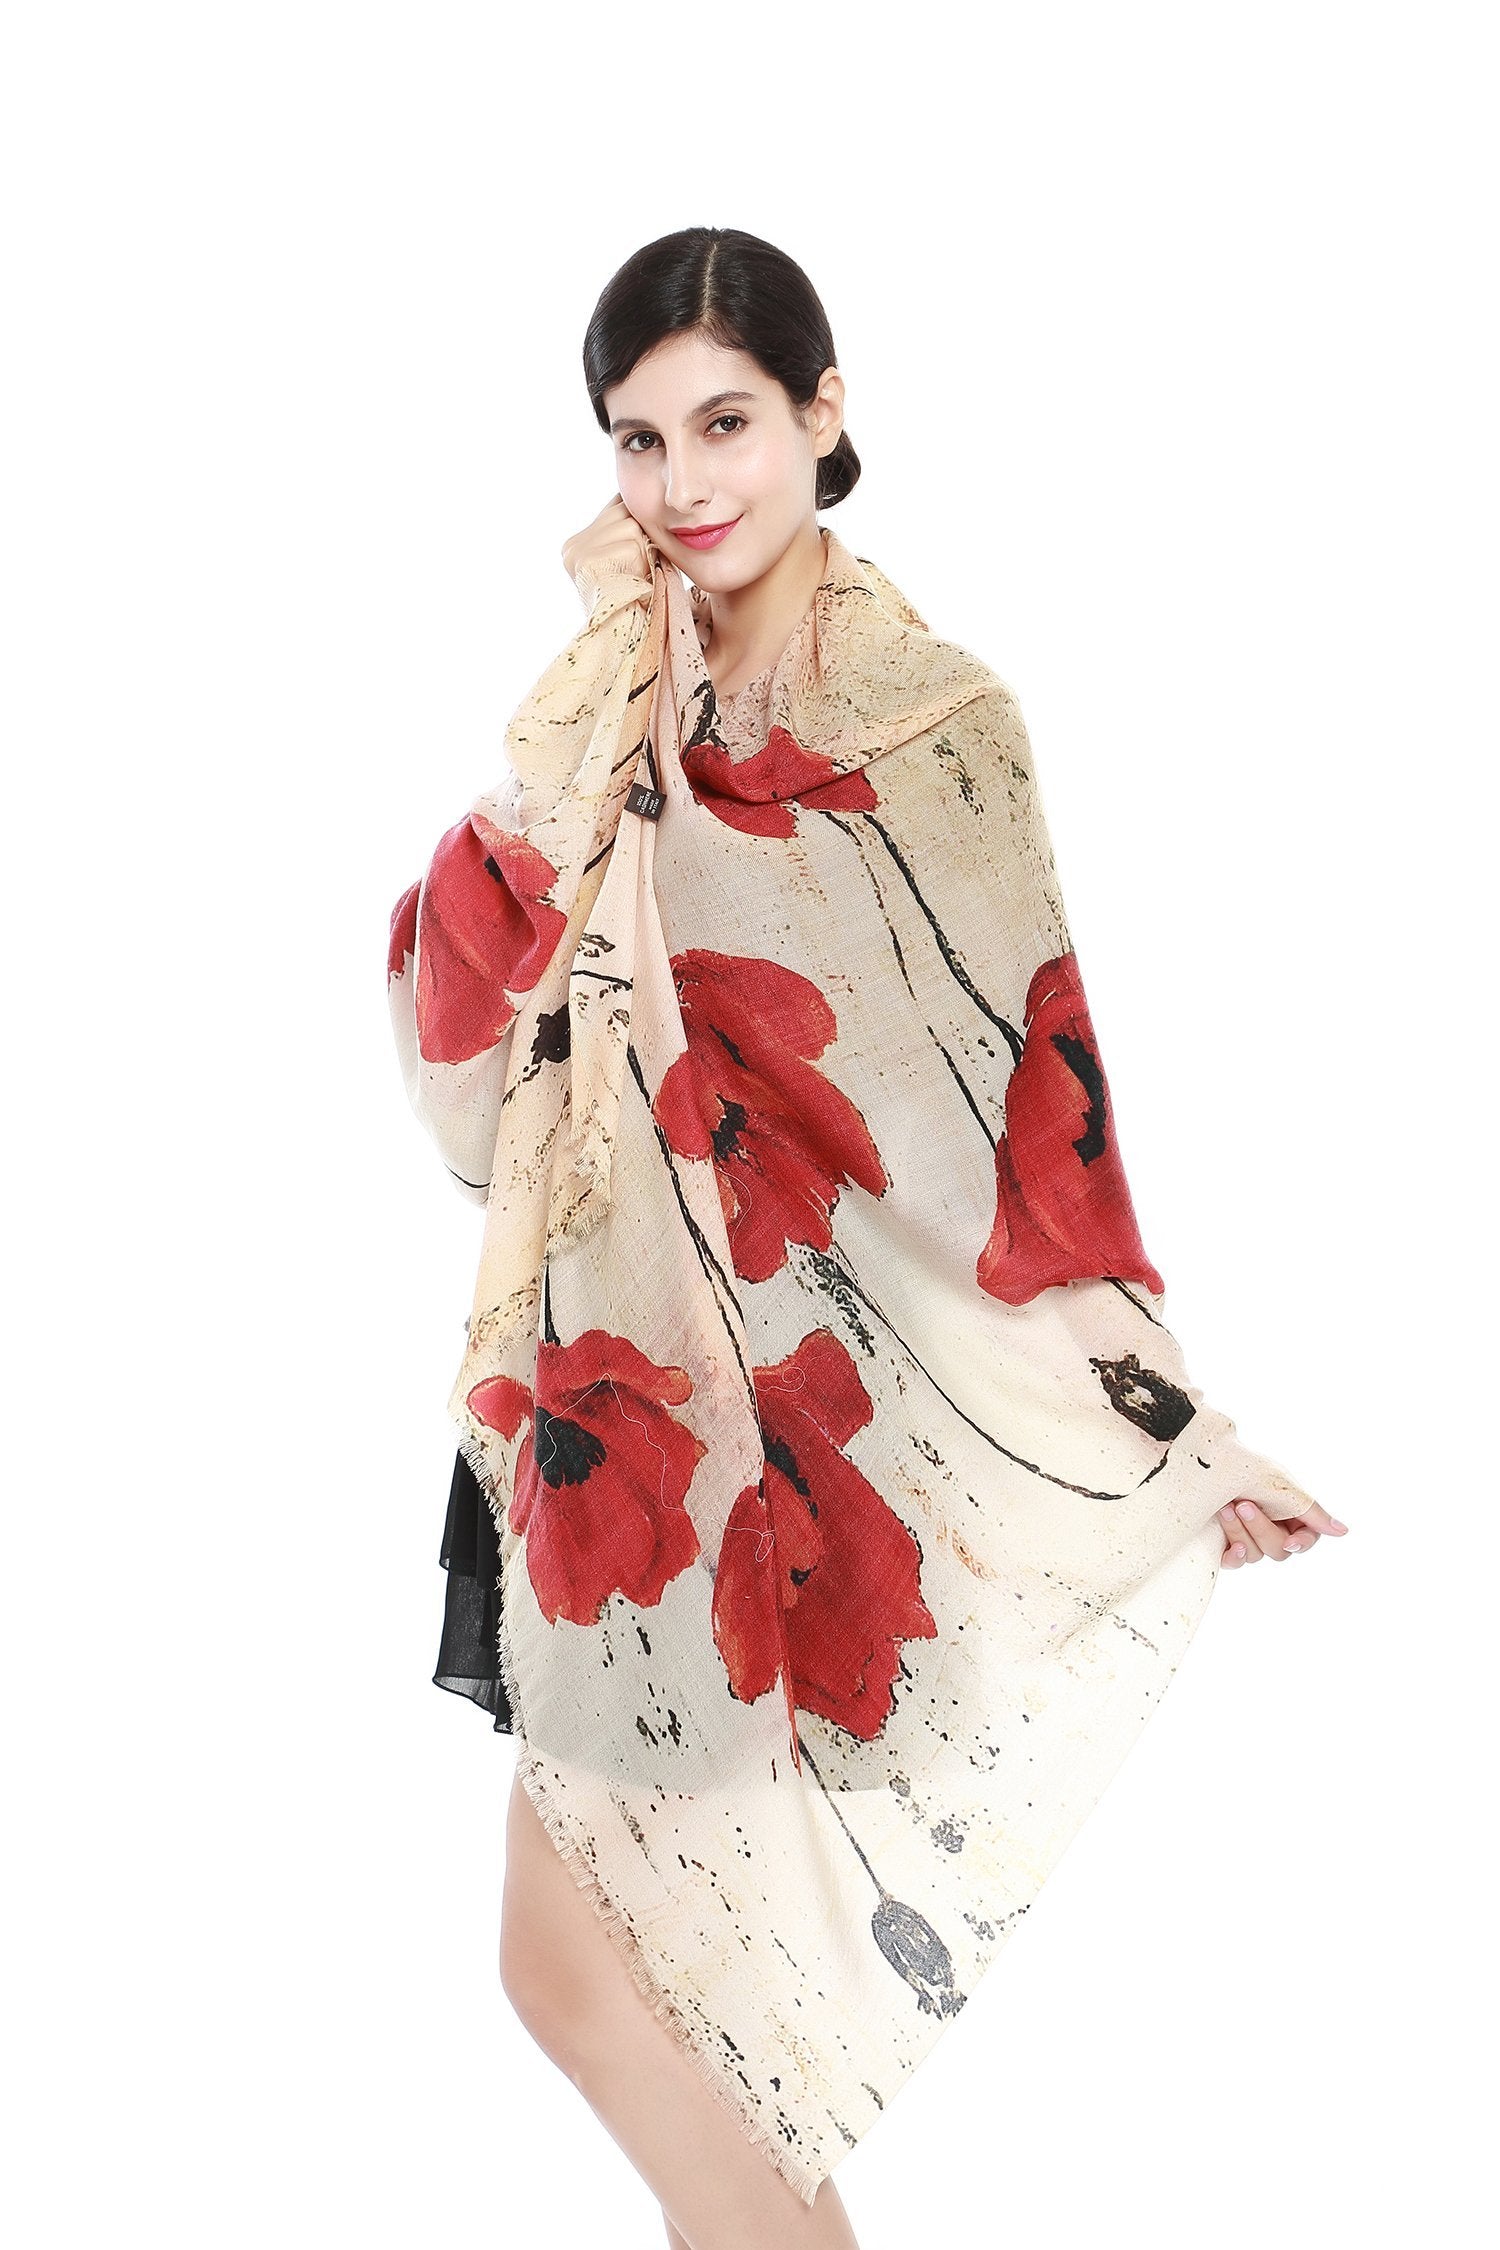 floral cashmere scarf